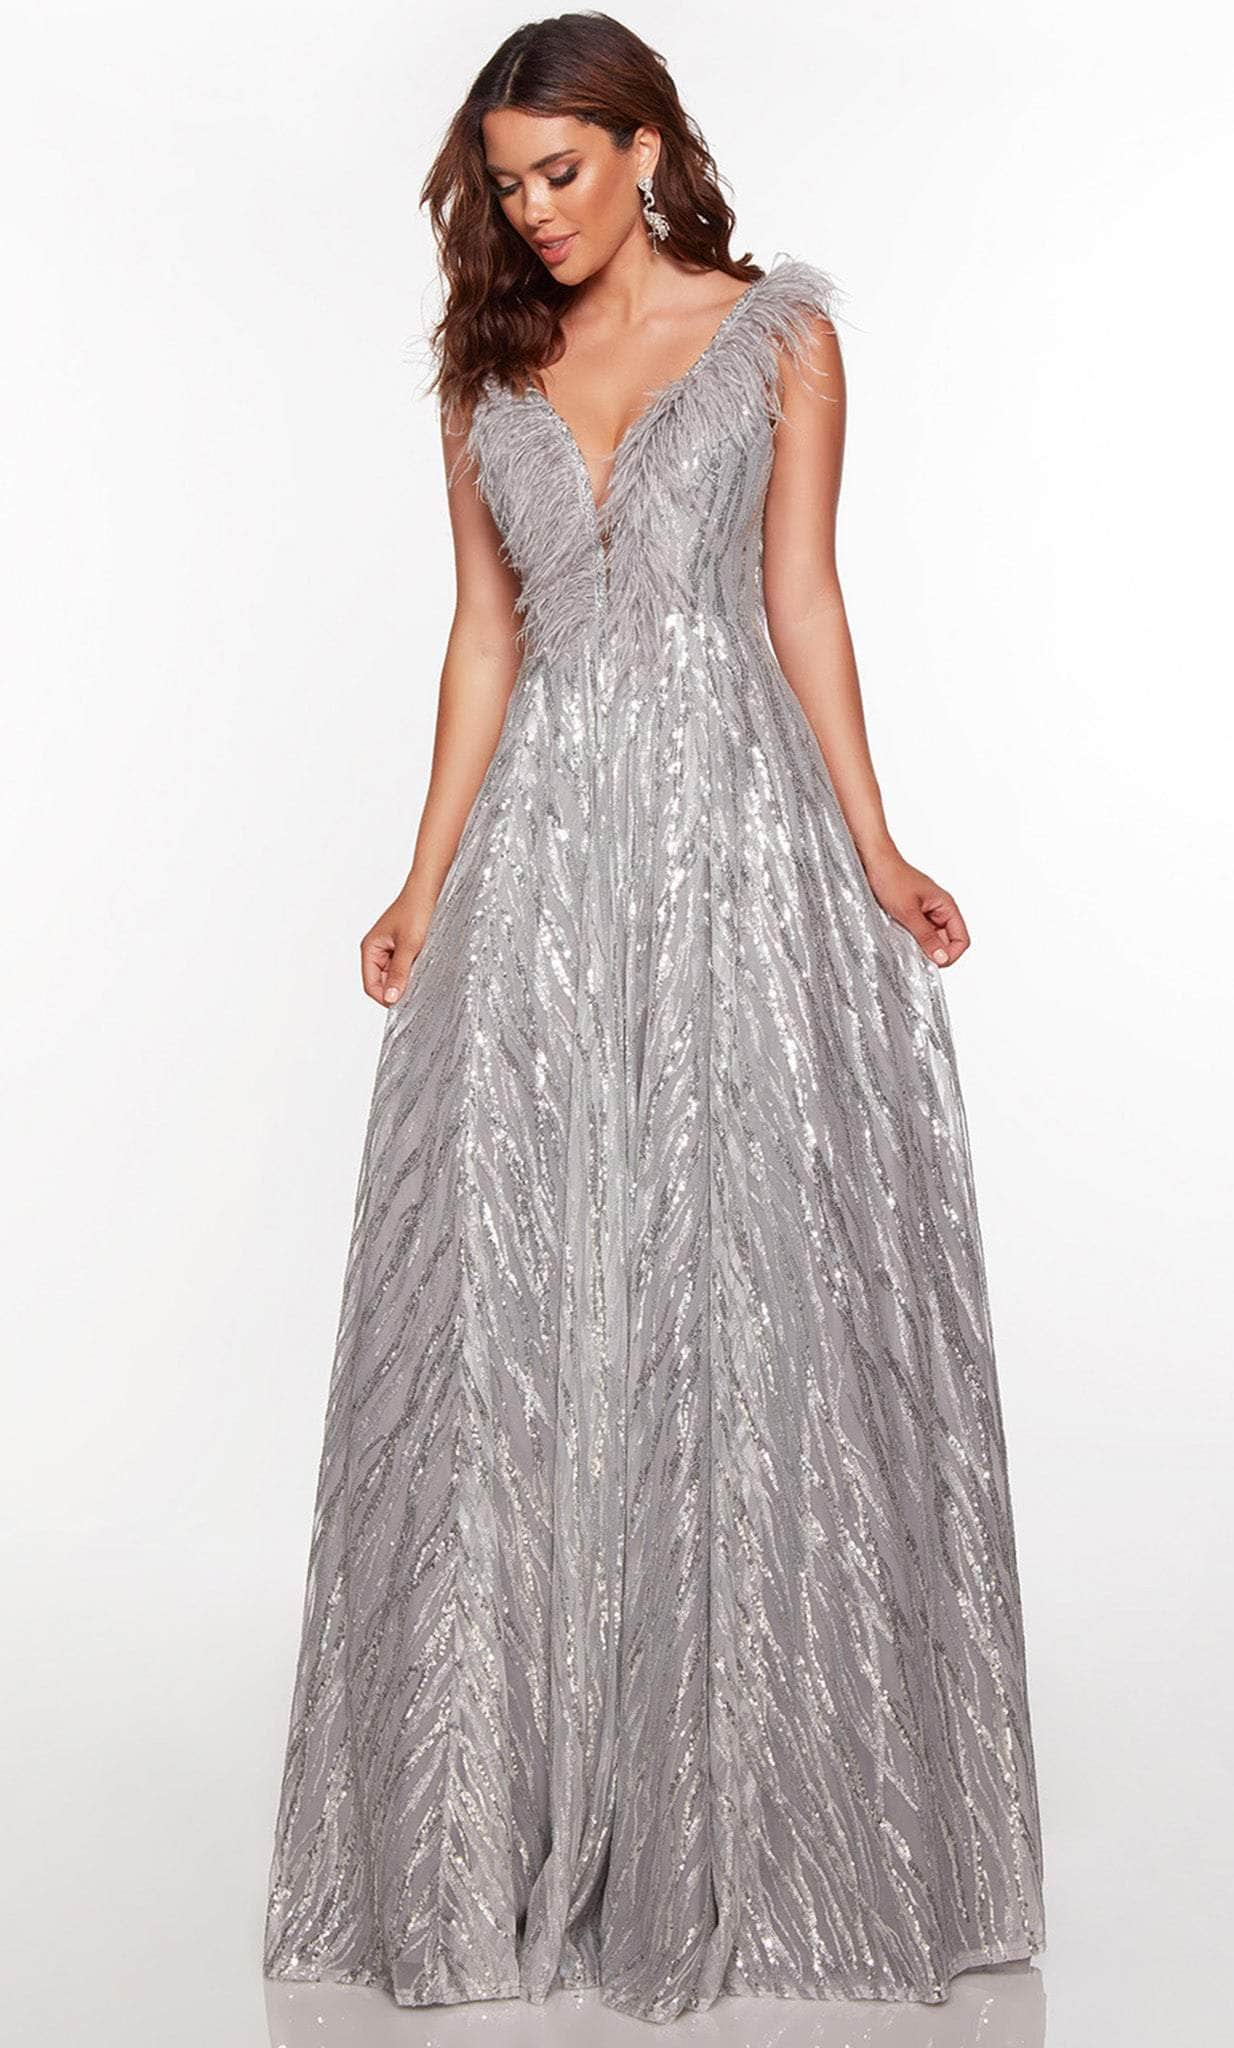 Alyce Paris 61311 - Scoop Back Dress Evening Dresses 000 / Silver